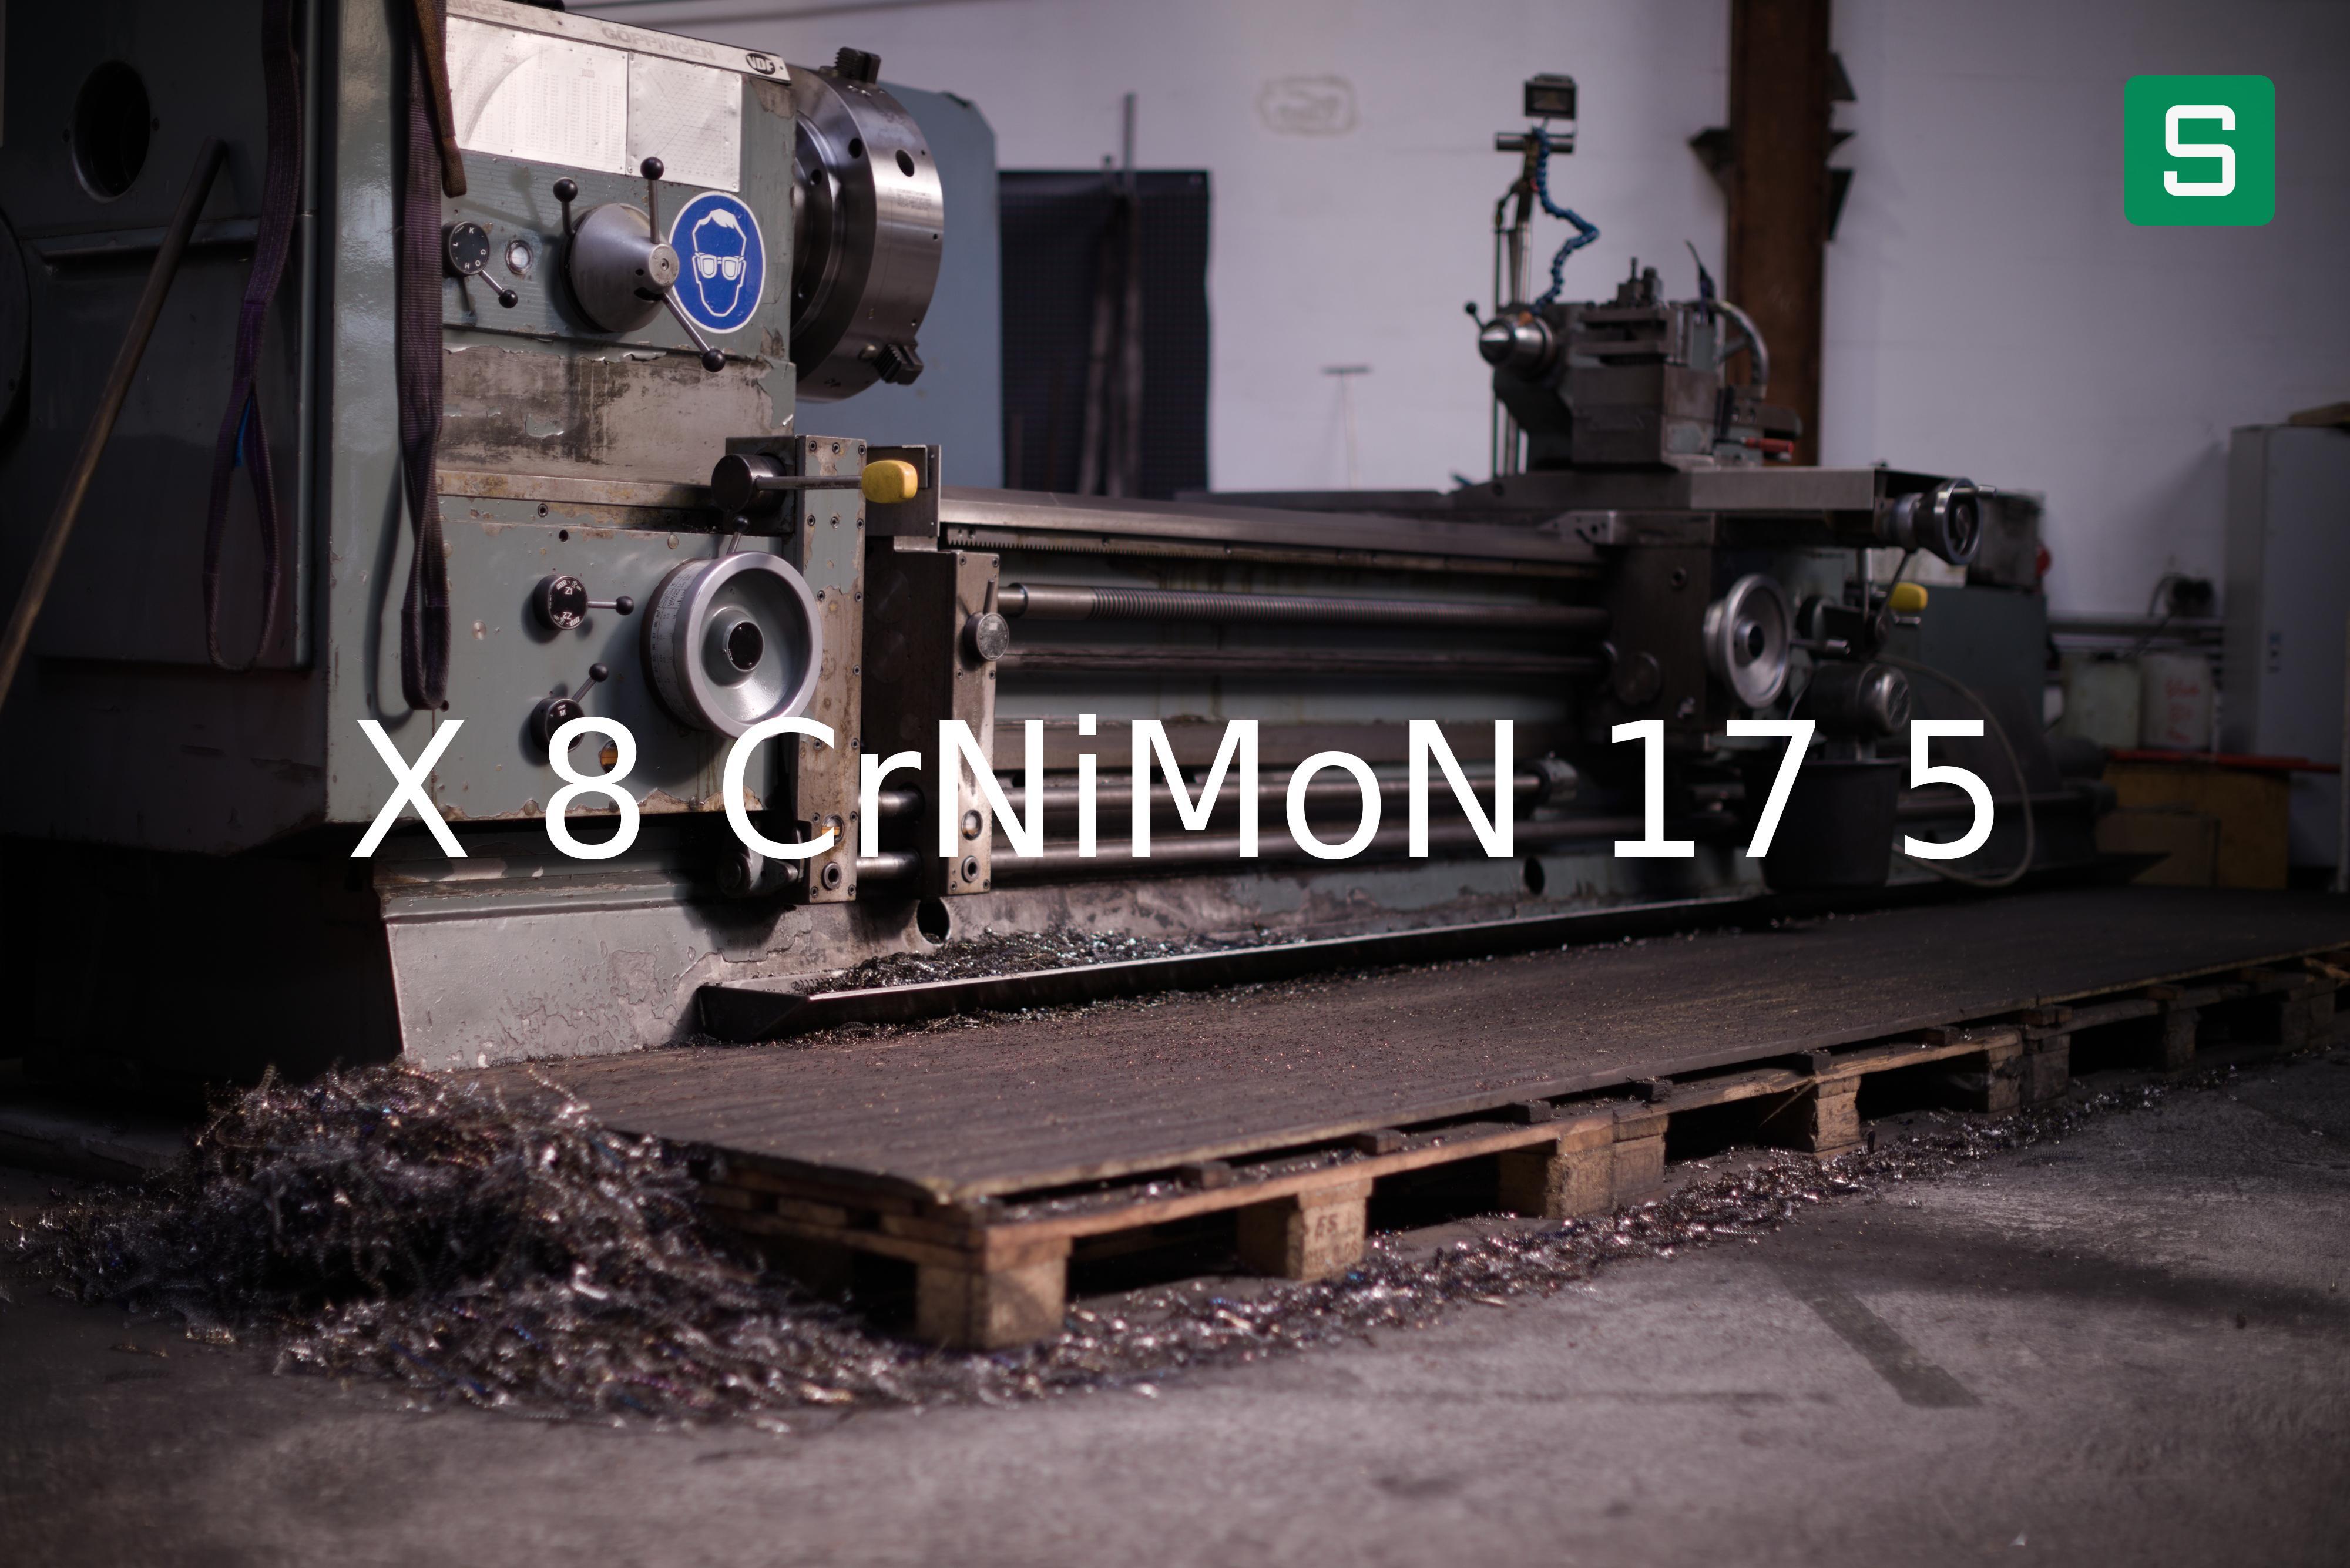 Steel Material: X 8 CrNiMoN 17 5